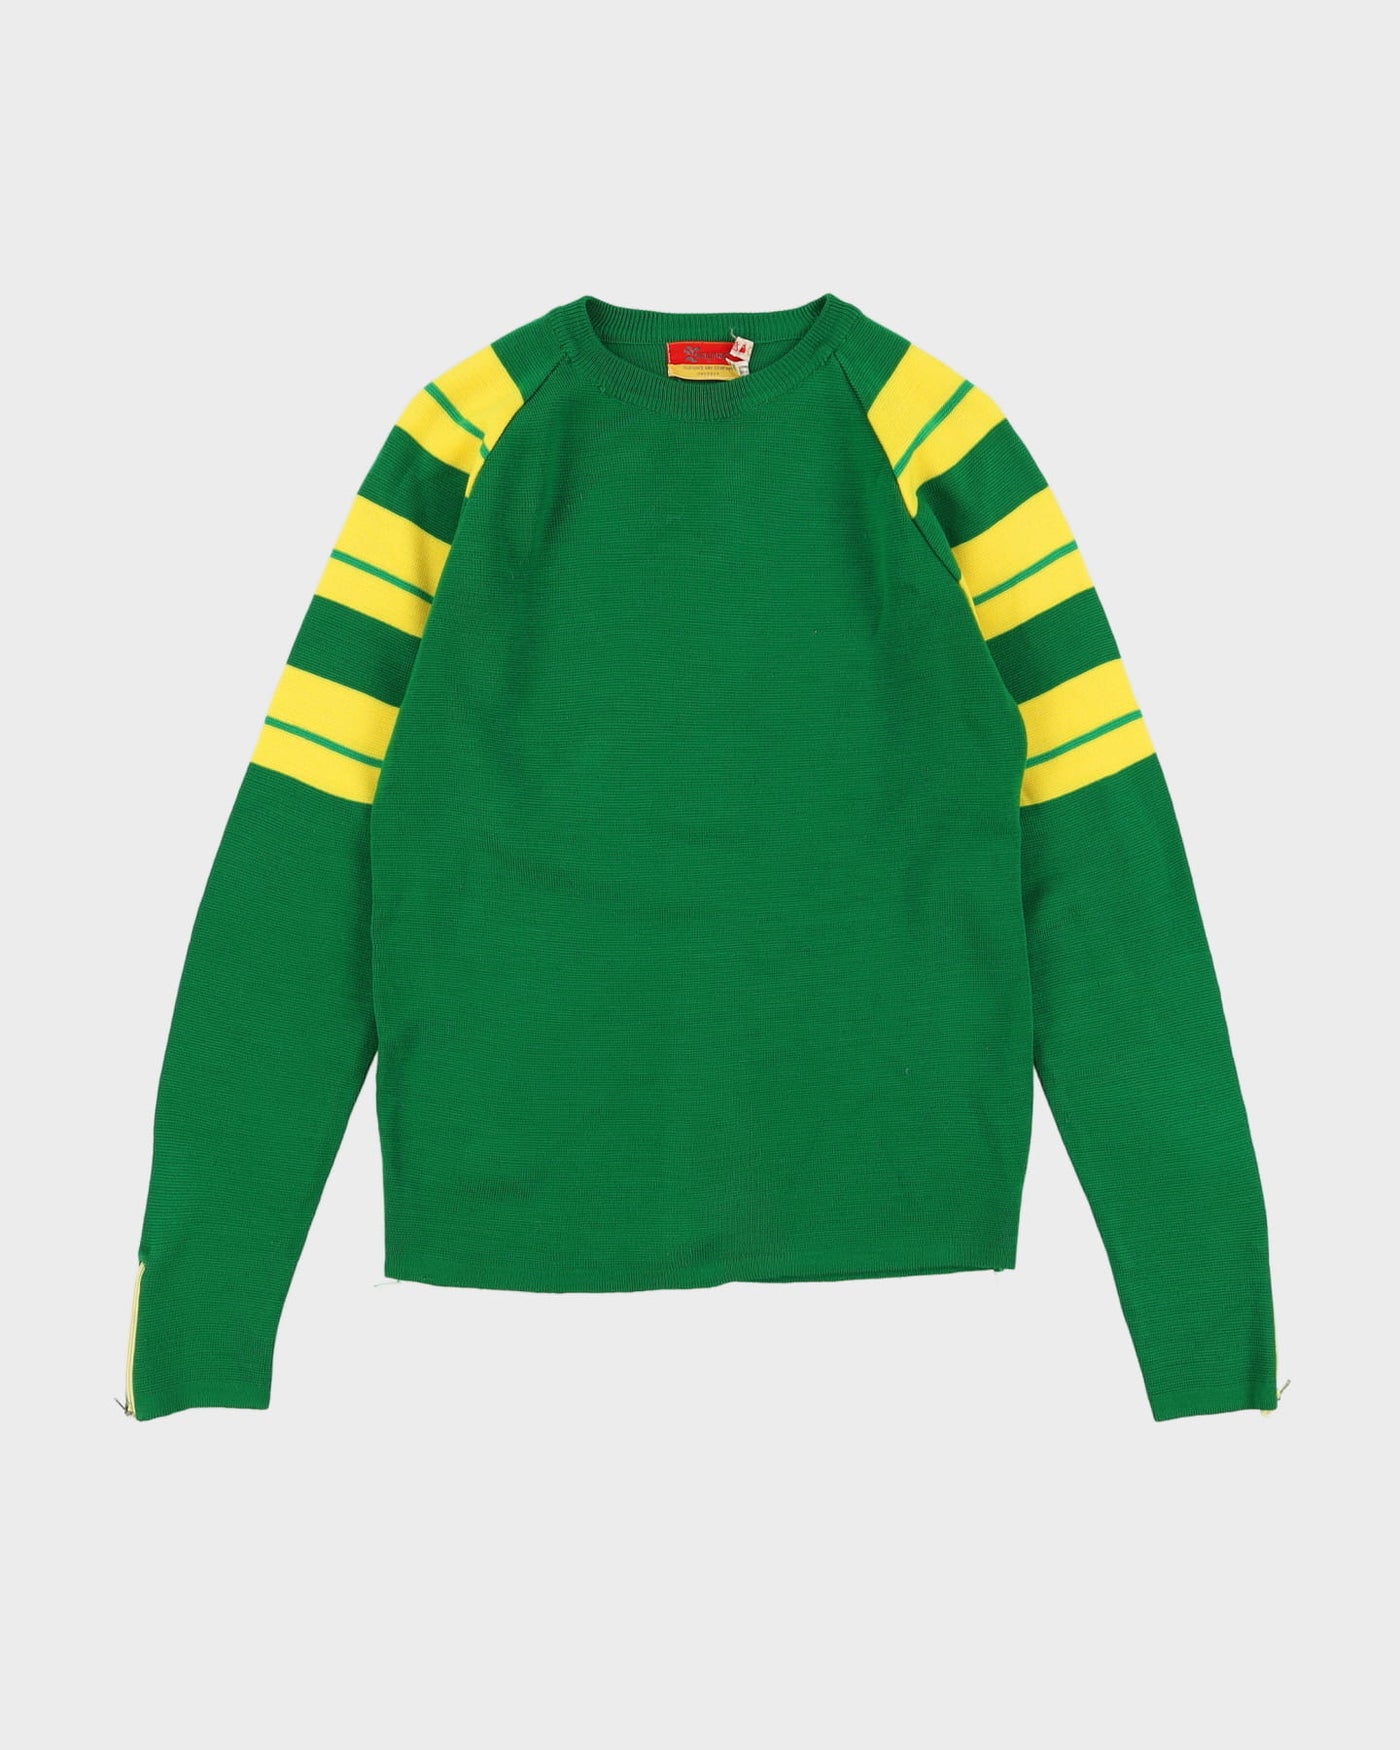 Vintage 70s Baymart Hudson Bay Green Knitted Sweatshirt - S